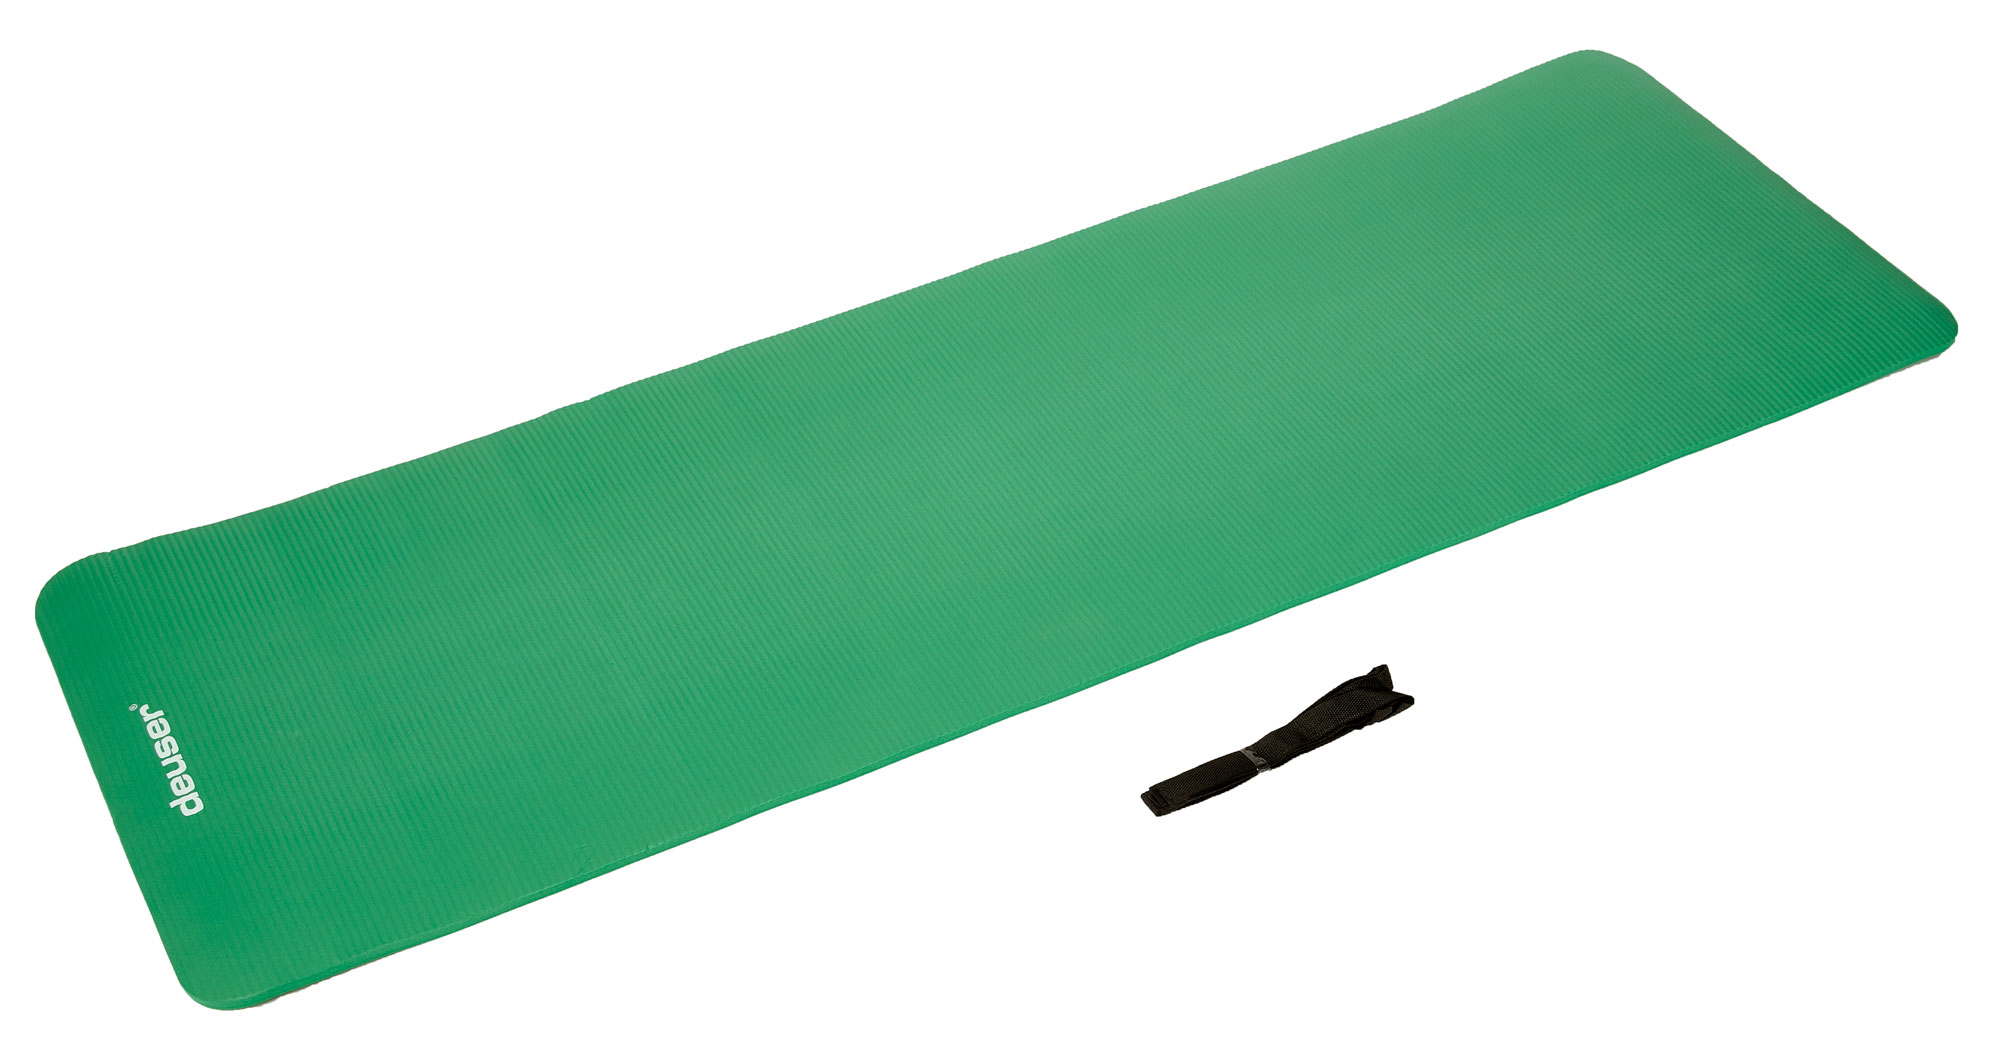 Deuser Exercise / Yoga / Pilates Mat green 121041G